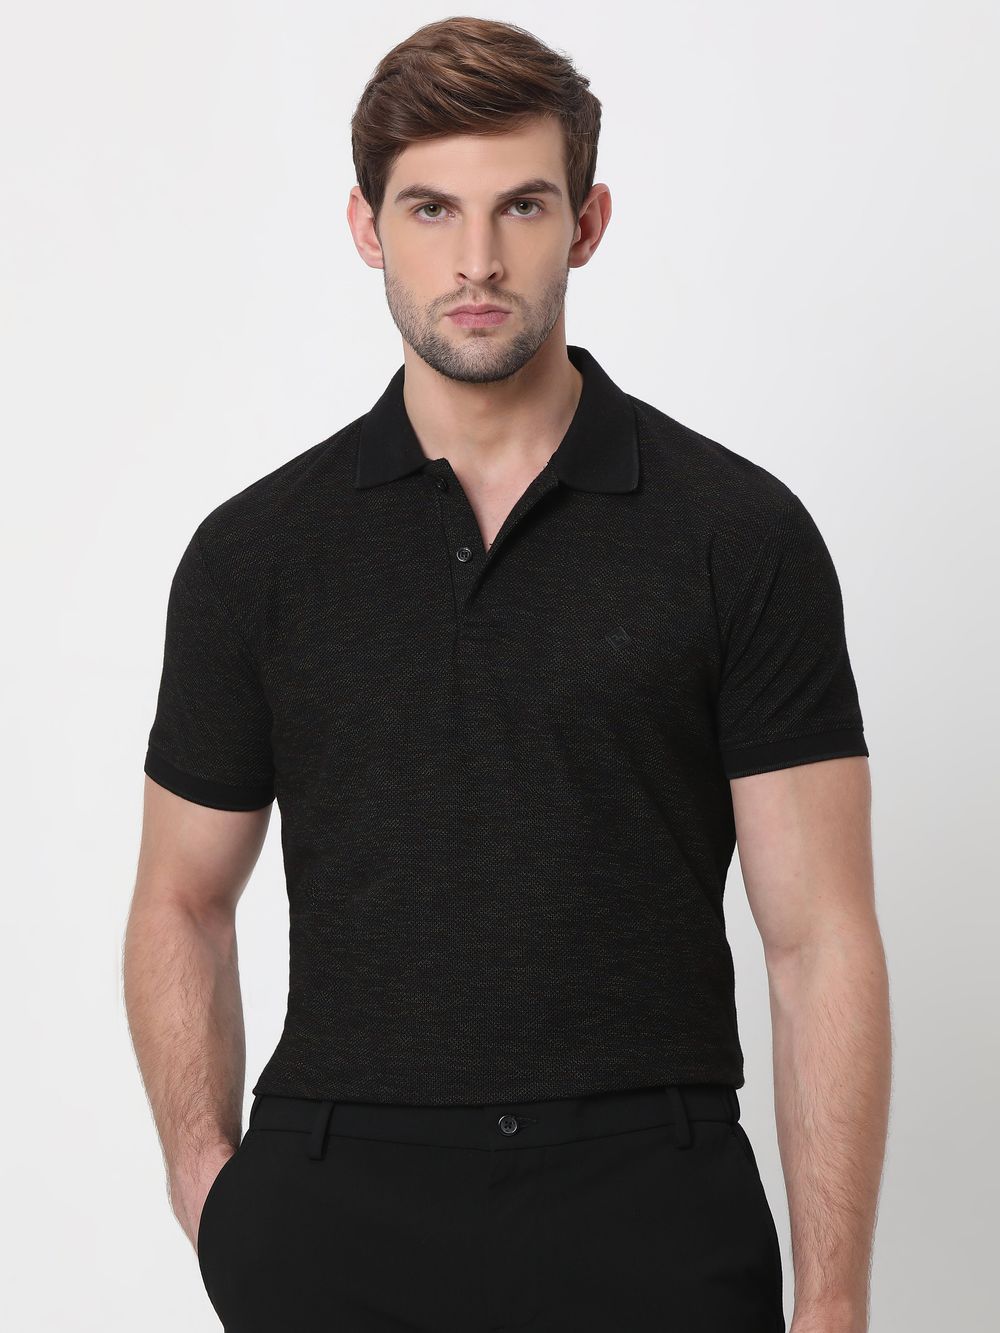 Black Space-Dyed Plain Slim Fit Polo T-Shirt